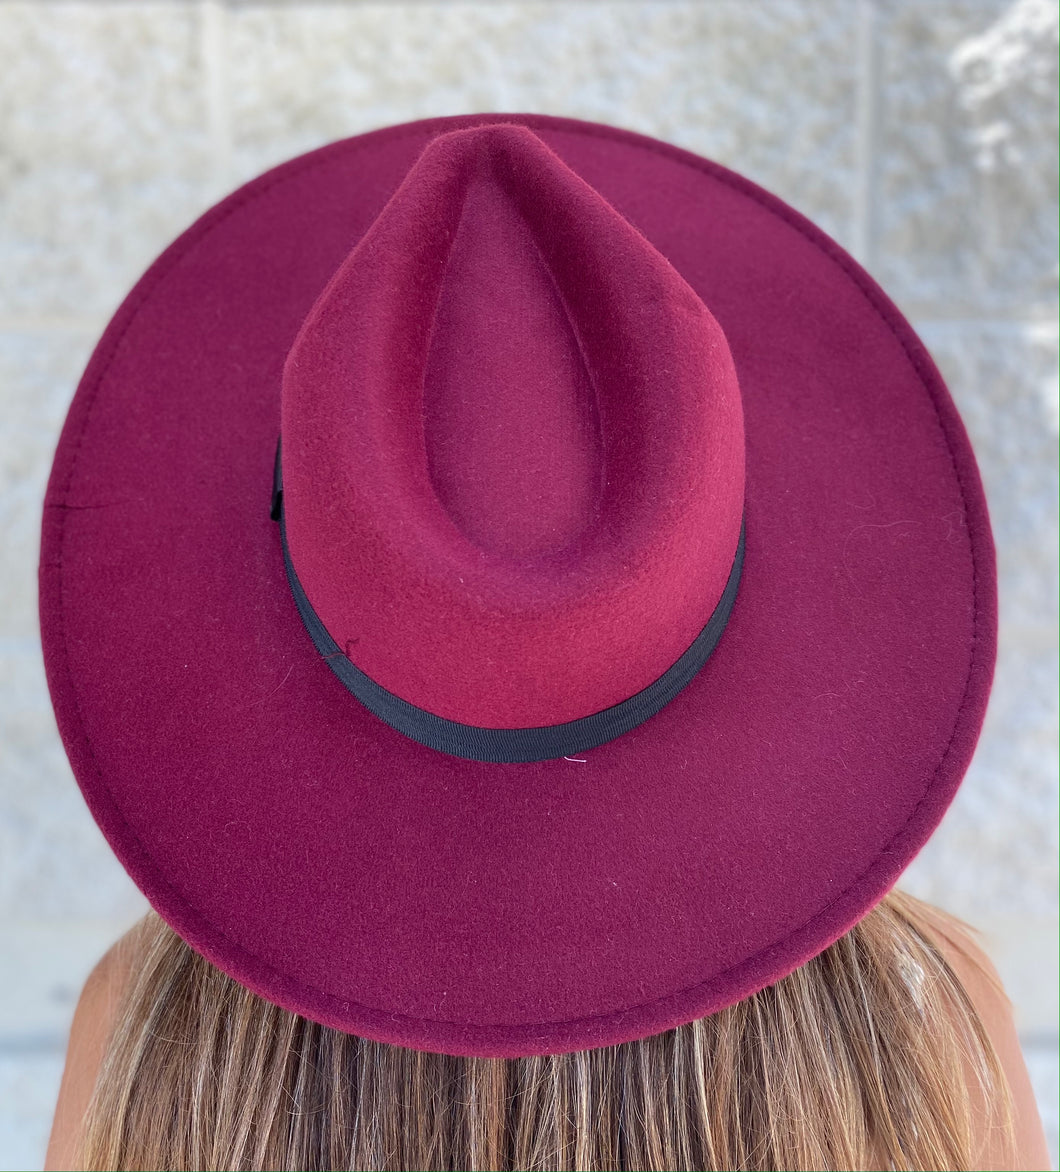 Burgundy Red hat